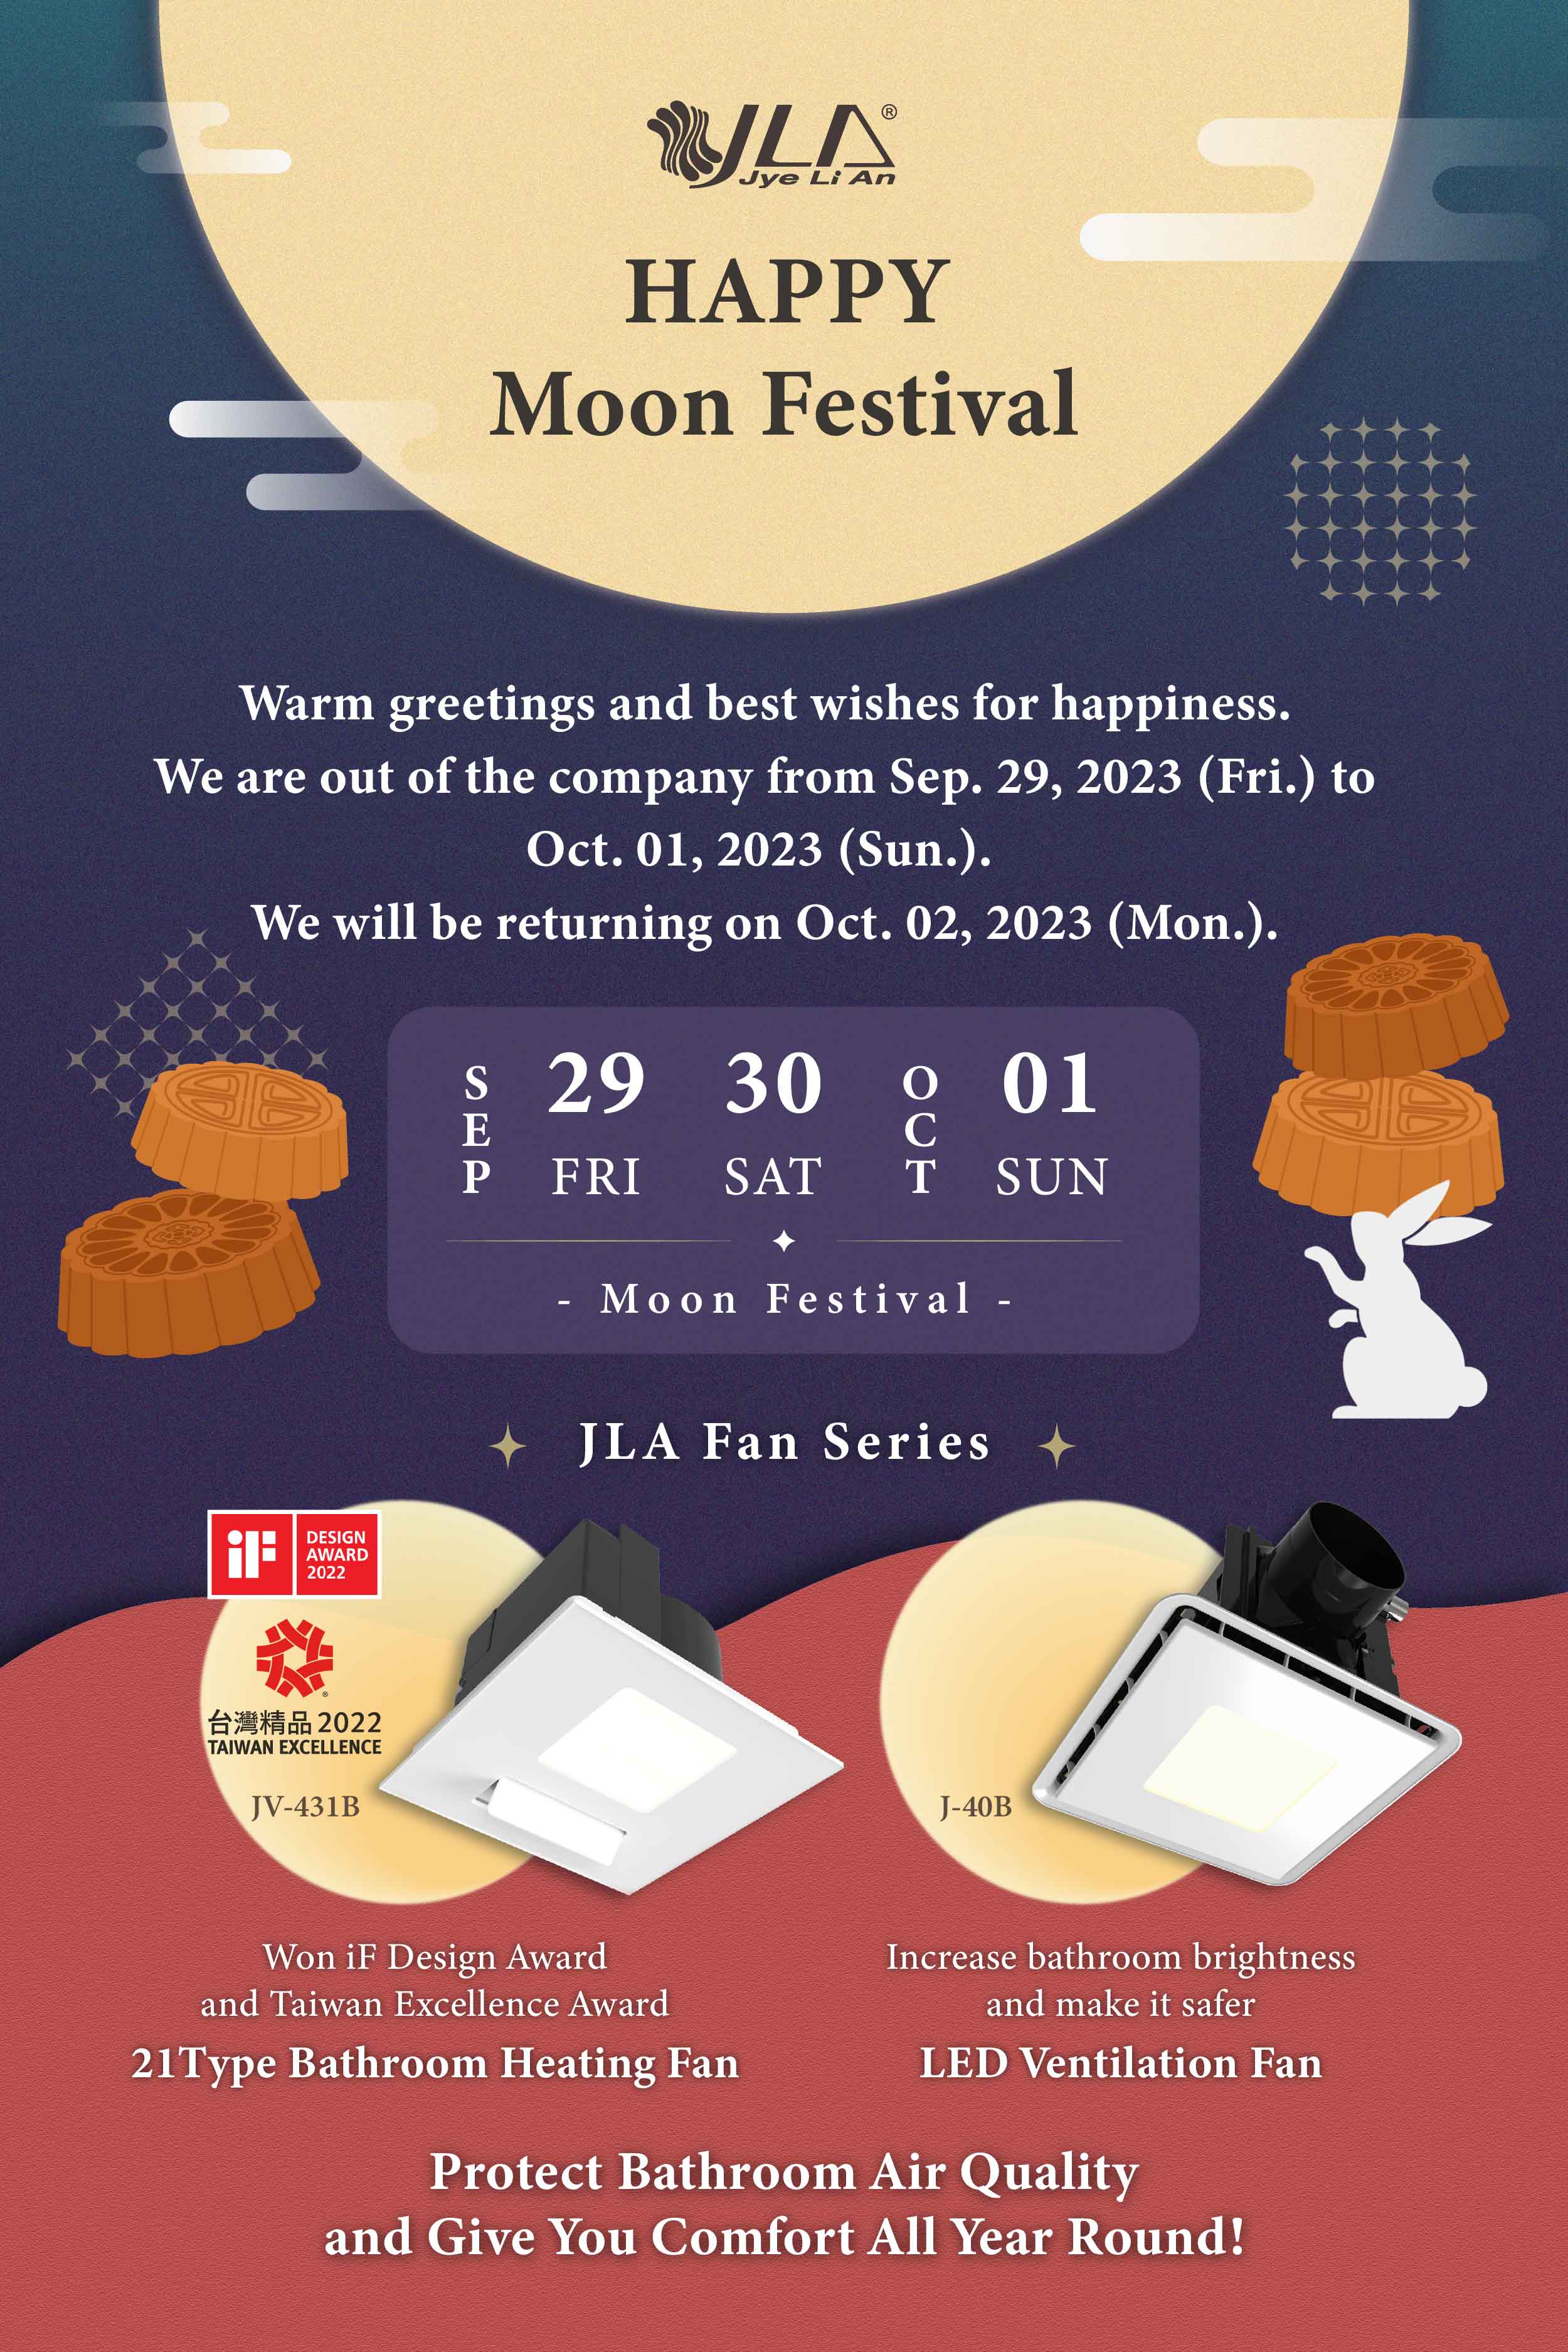 Happy Moon Festival 2023